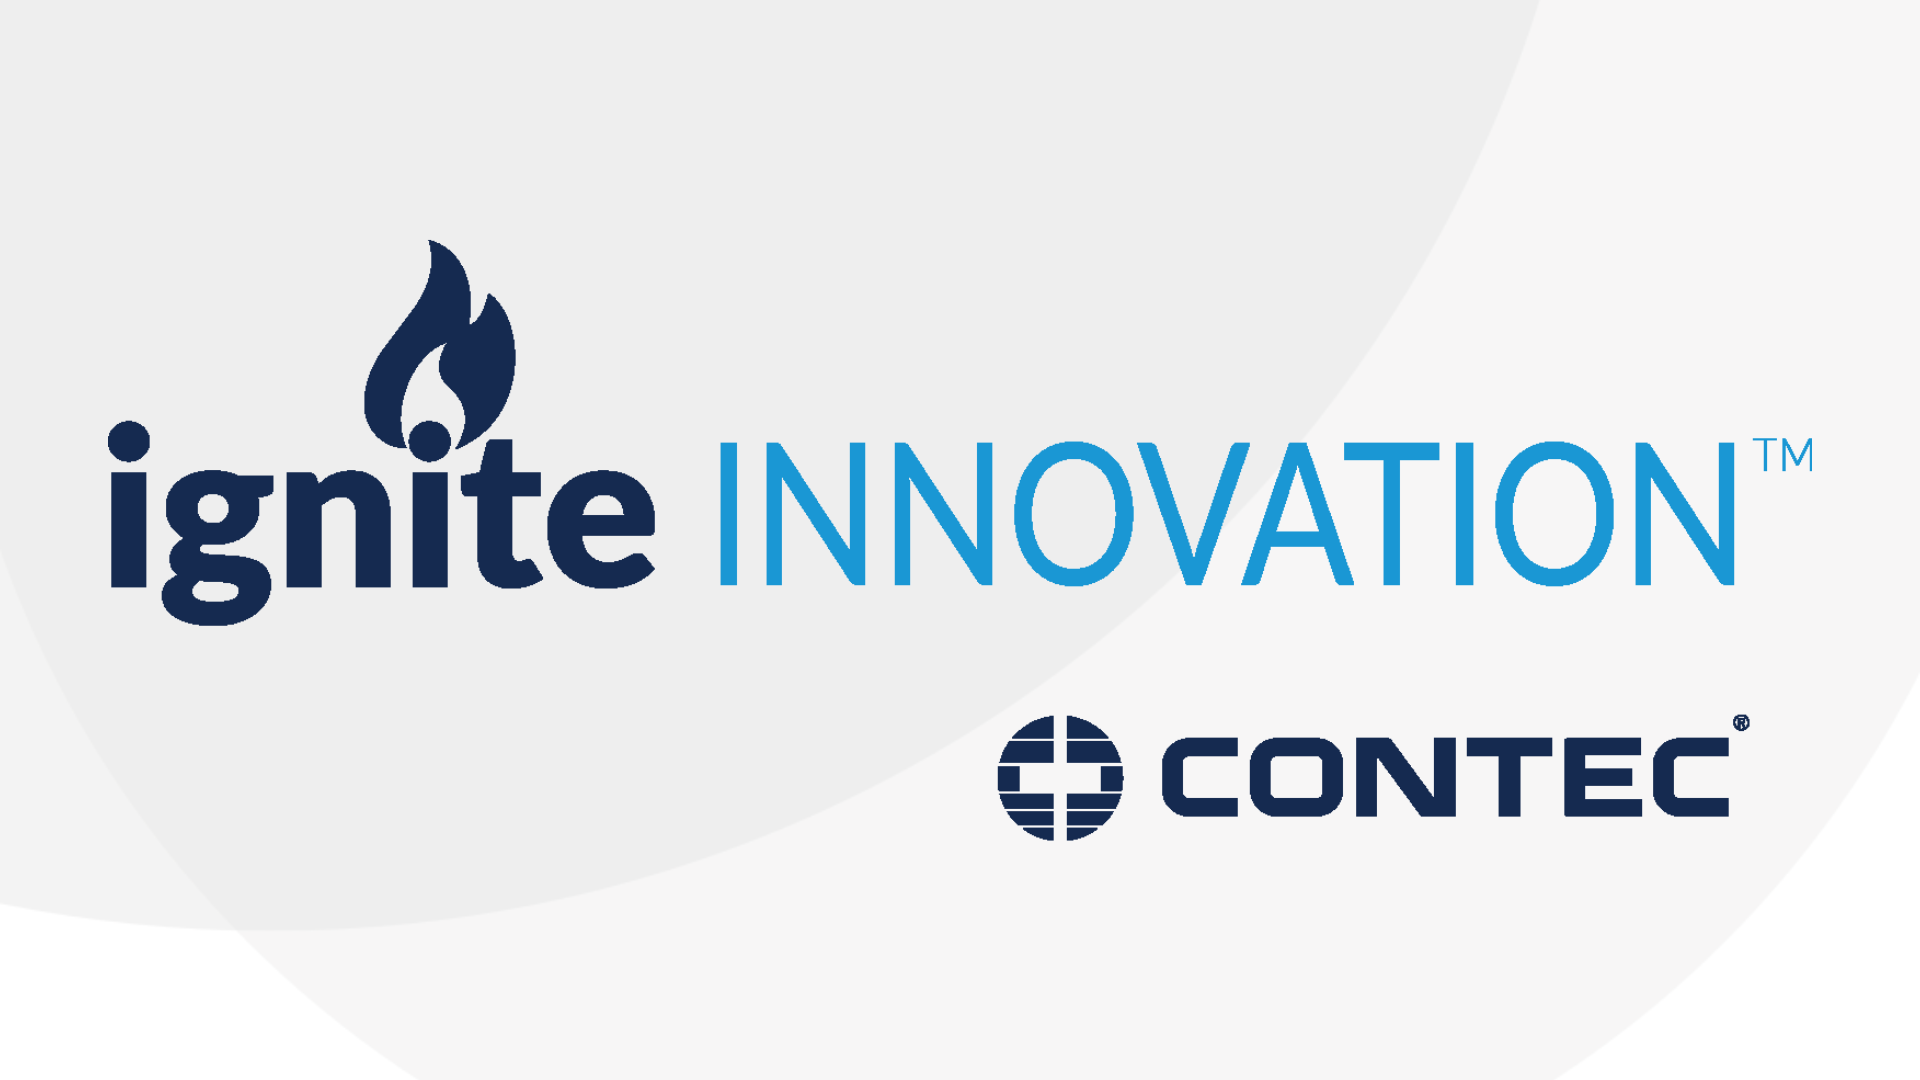 Image of Contec “Ignites Innovation” through Customer Feedback